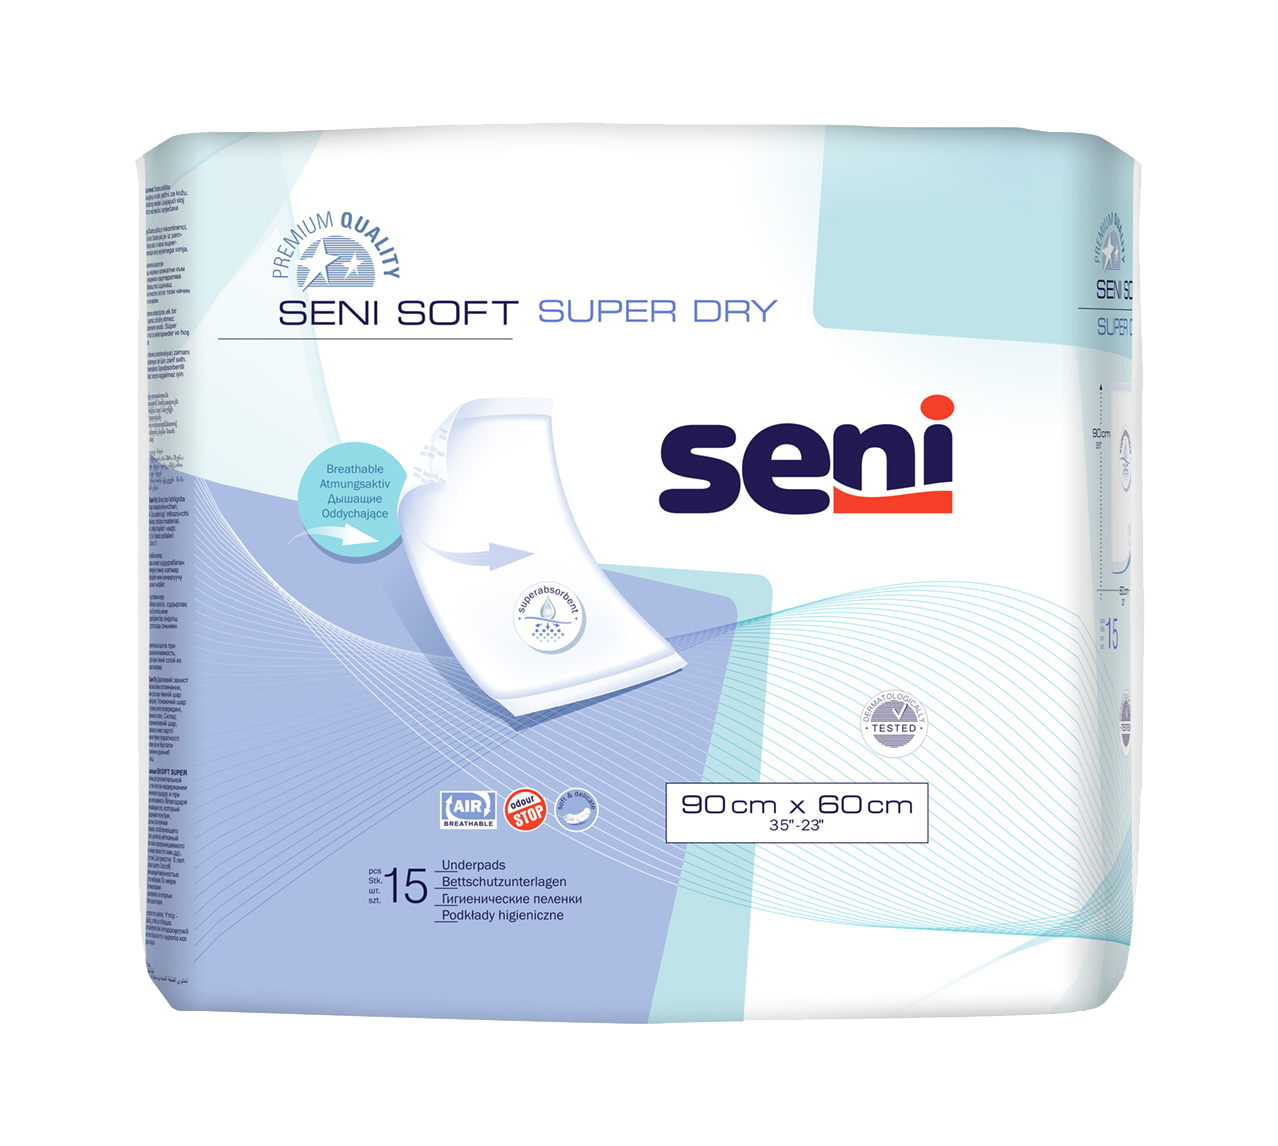 Seni Soft Super Dry Bettschutzunterlagen 90cm x 60cm / 15 Stück